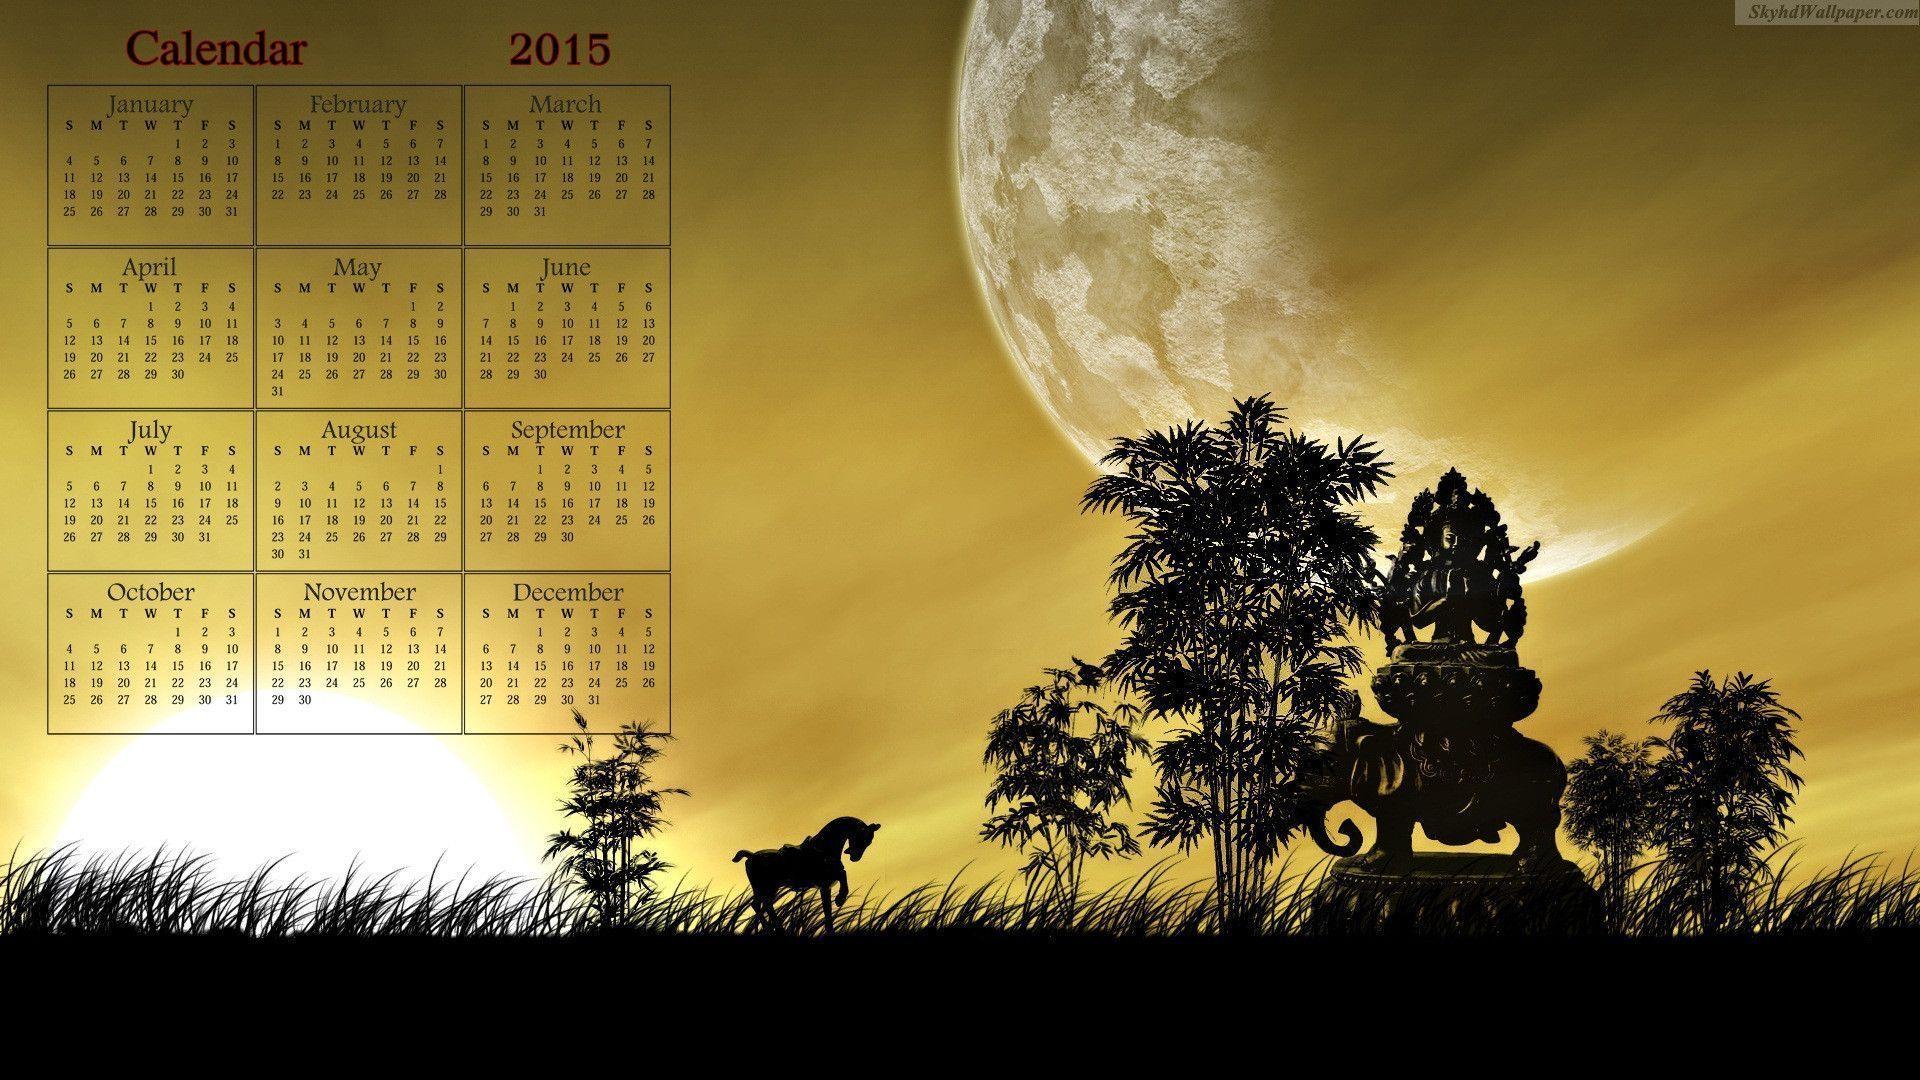 Calendar 2015 Wallpaper. Sky HD Wallpaper